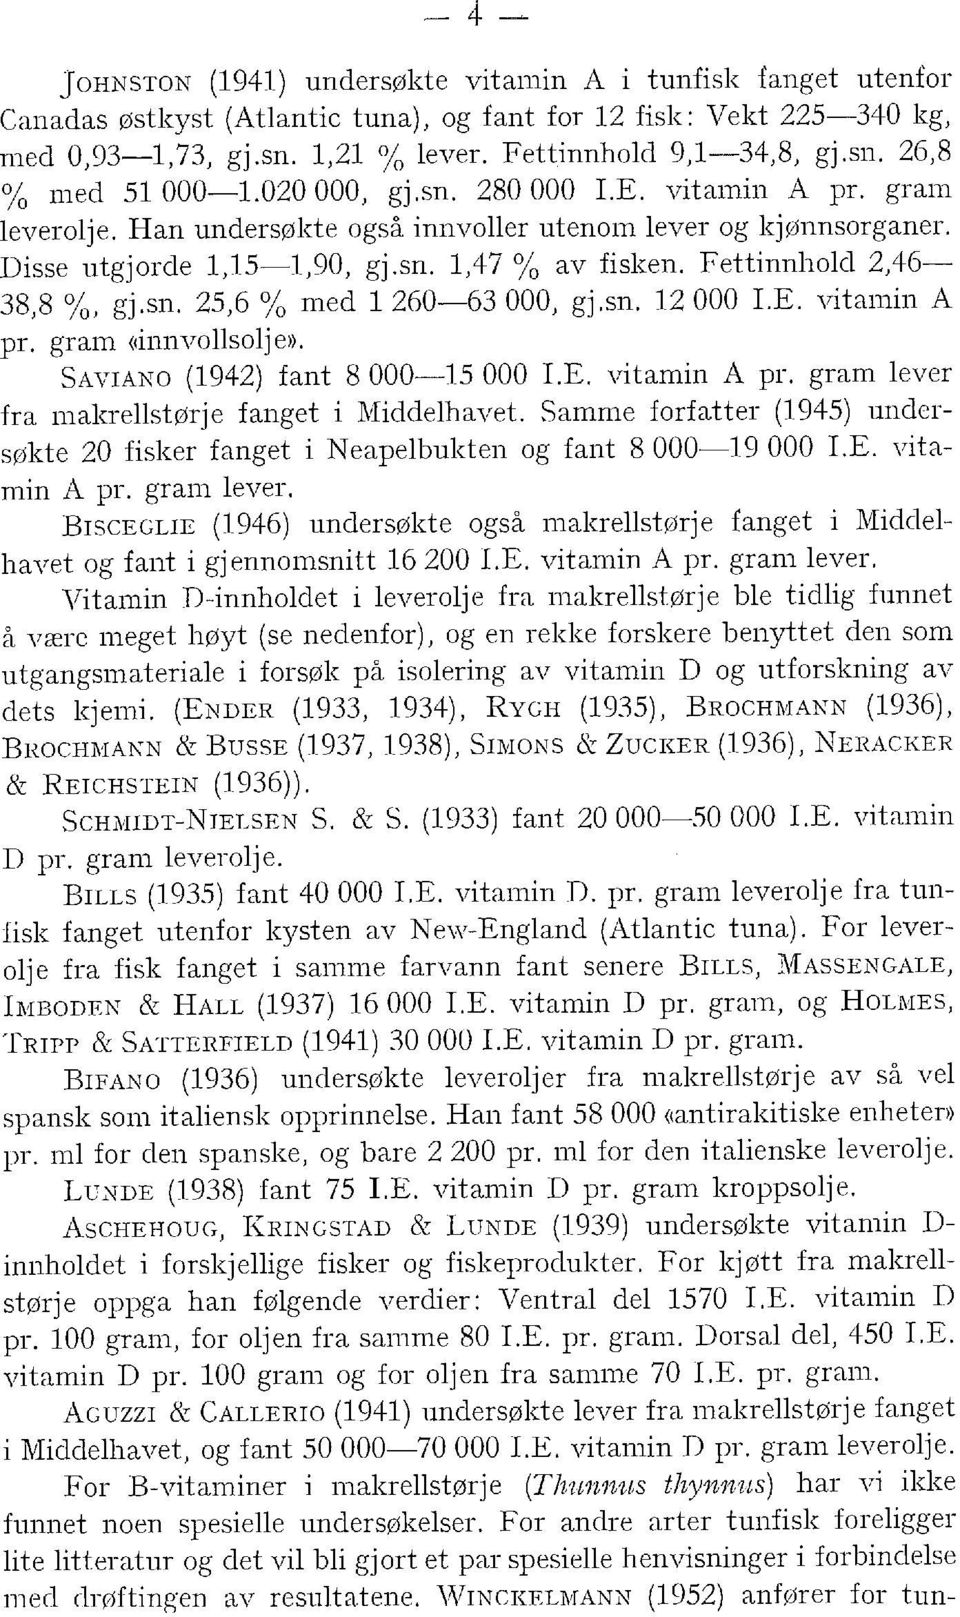 sn. 25,6 / 0 n1ed 260-63 000, gj.sn. 12 000 I.E. vitan1in A pr. gra1n <<innvosoje>>. SAVIANO (1942) fant 8 000-15 000 I.E. vitamin A pr. gran1 ever fra n1akrestørje fanget i Middehavet.